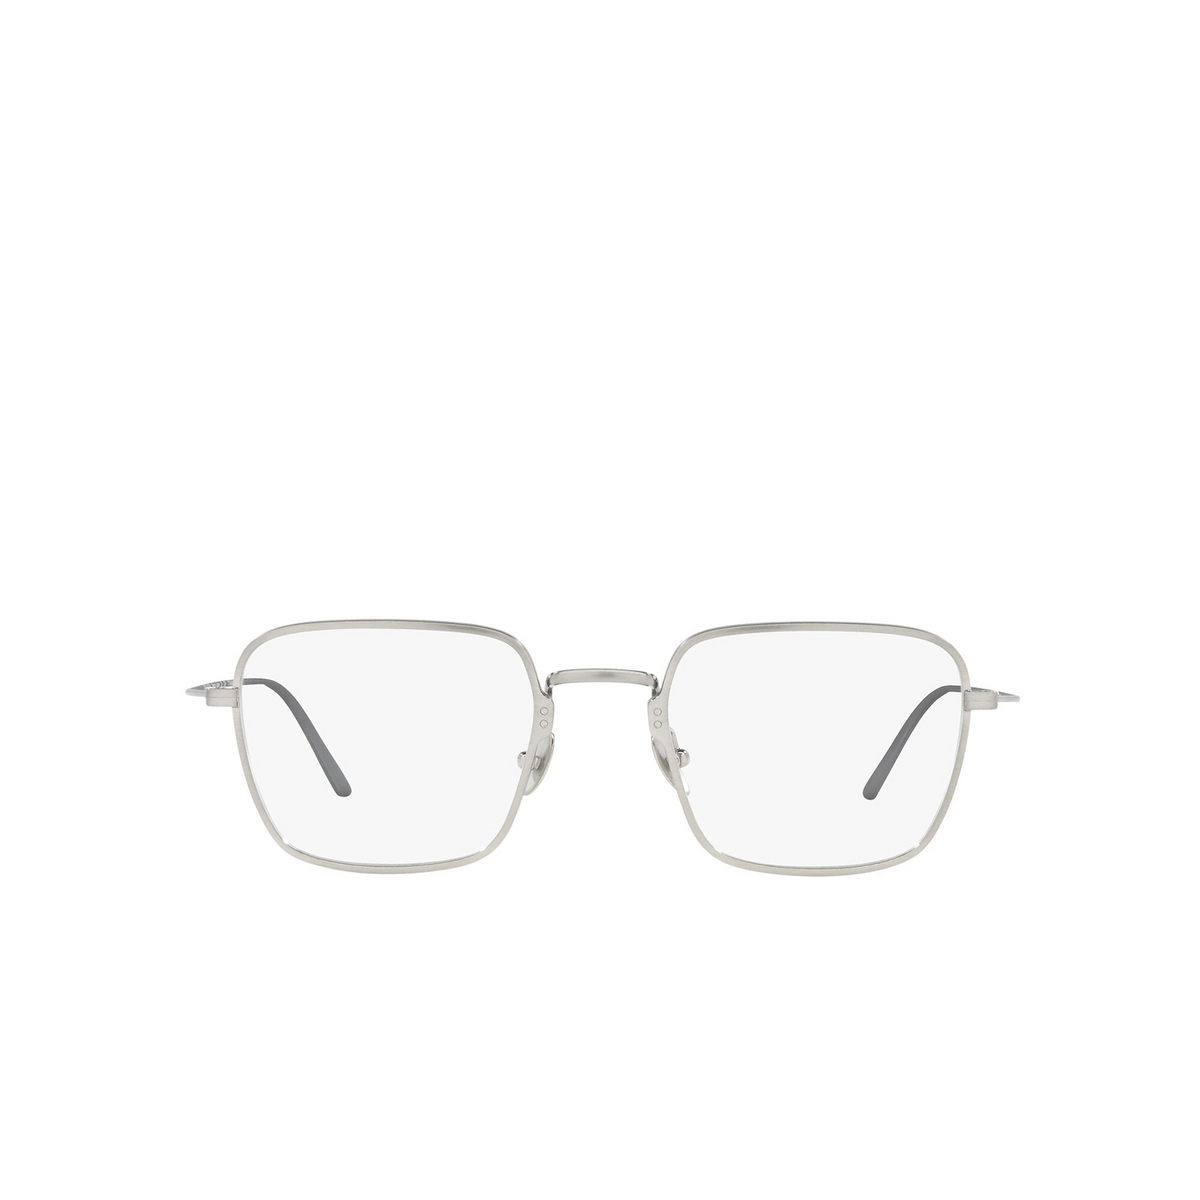 Prada® Square Eyeglasses: PR 51YV color Satin Titanium 05Q1O1 - front view.